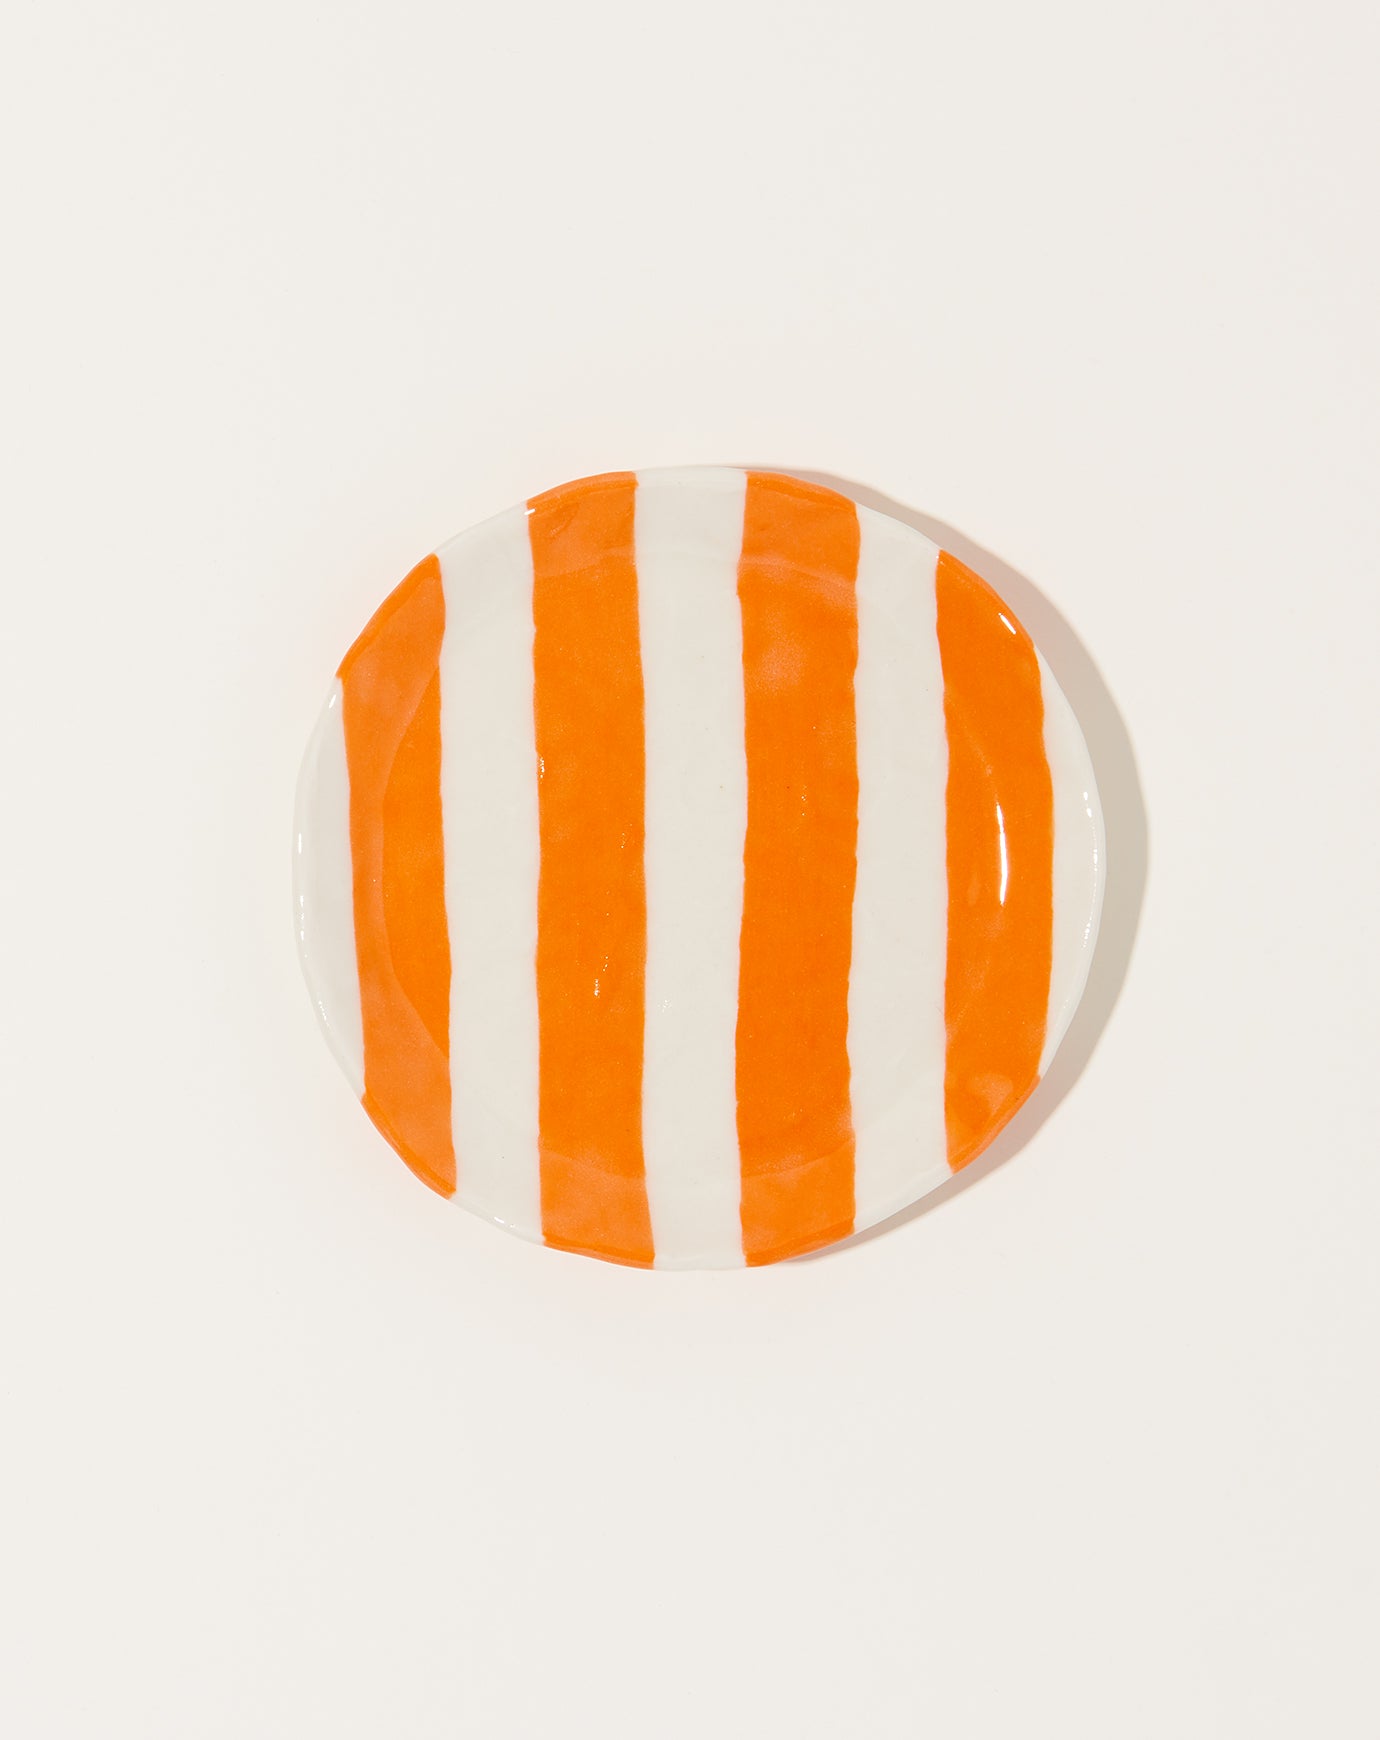 Isabel Halley Ribbon Plate in Orange